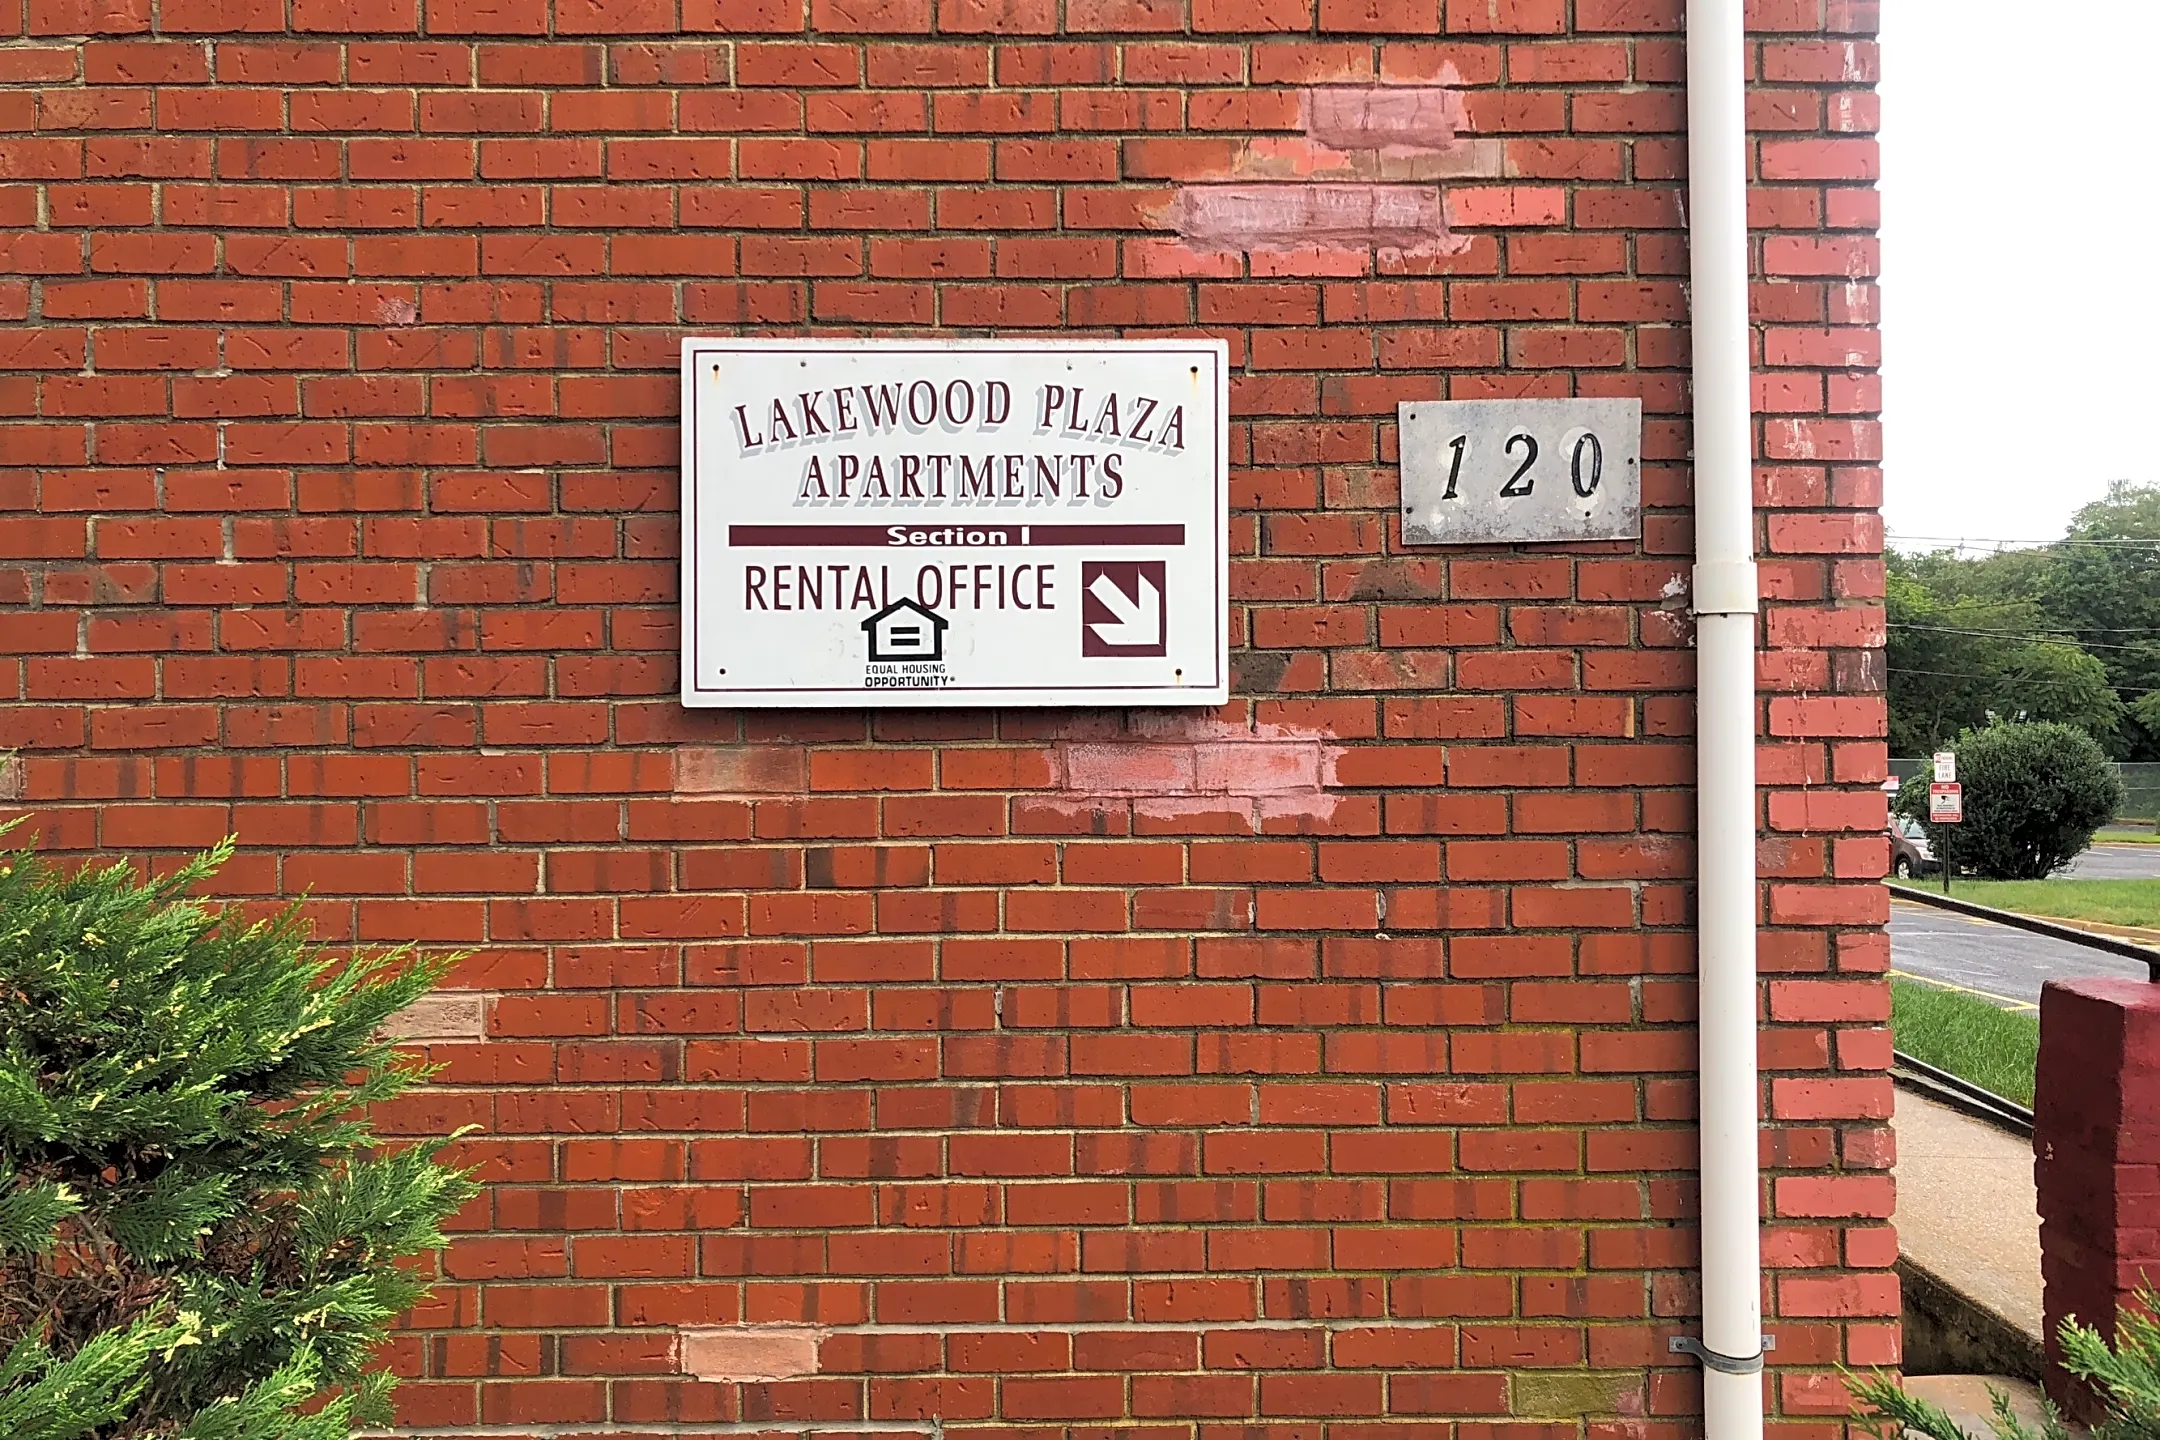 Pool - Lakewood Plaza Apartments - Lakewood, NJ